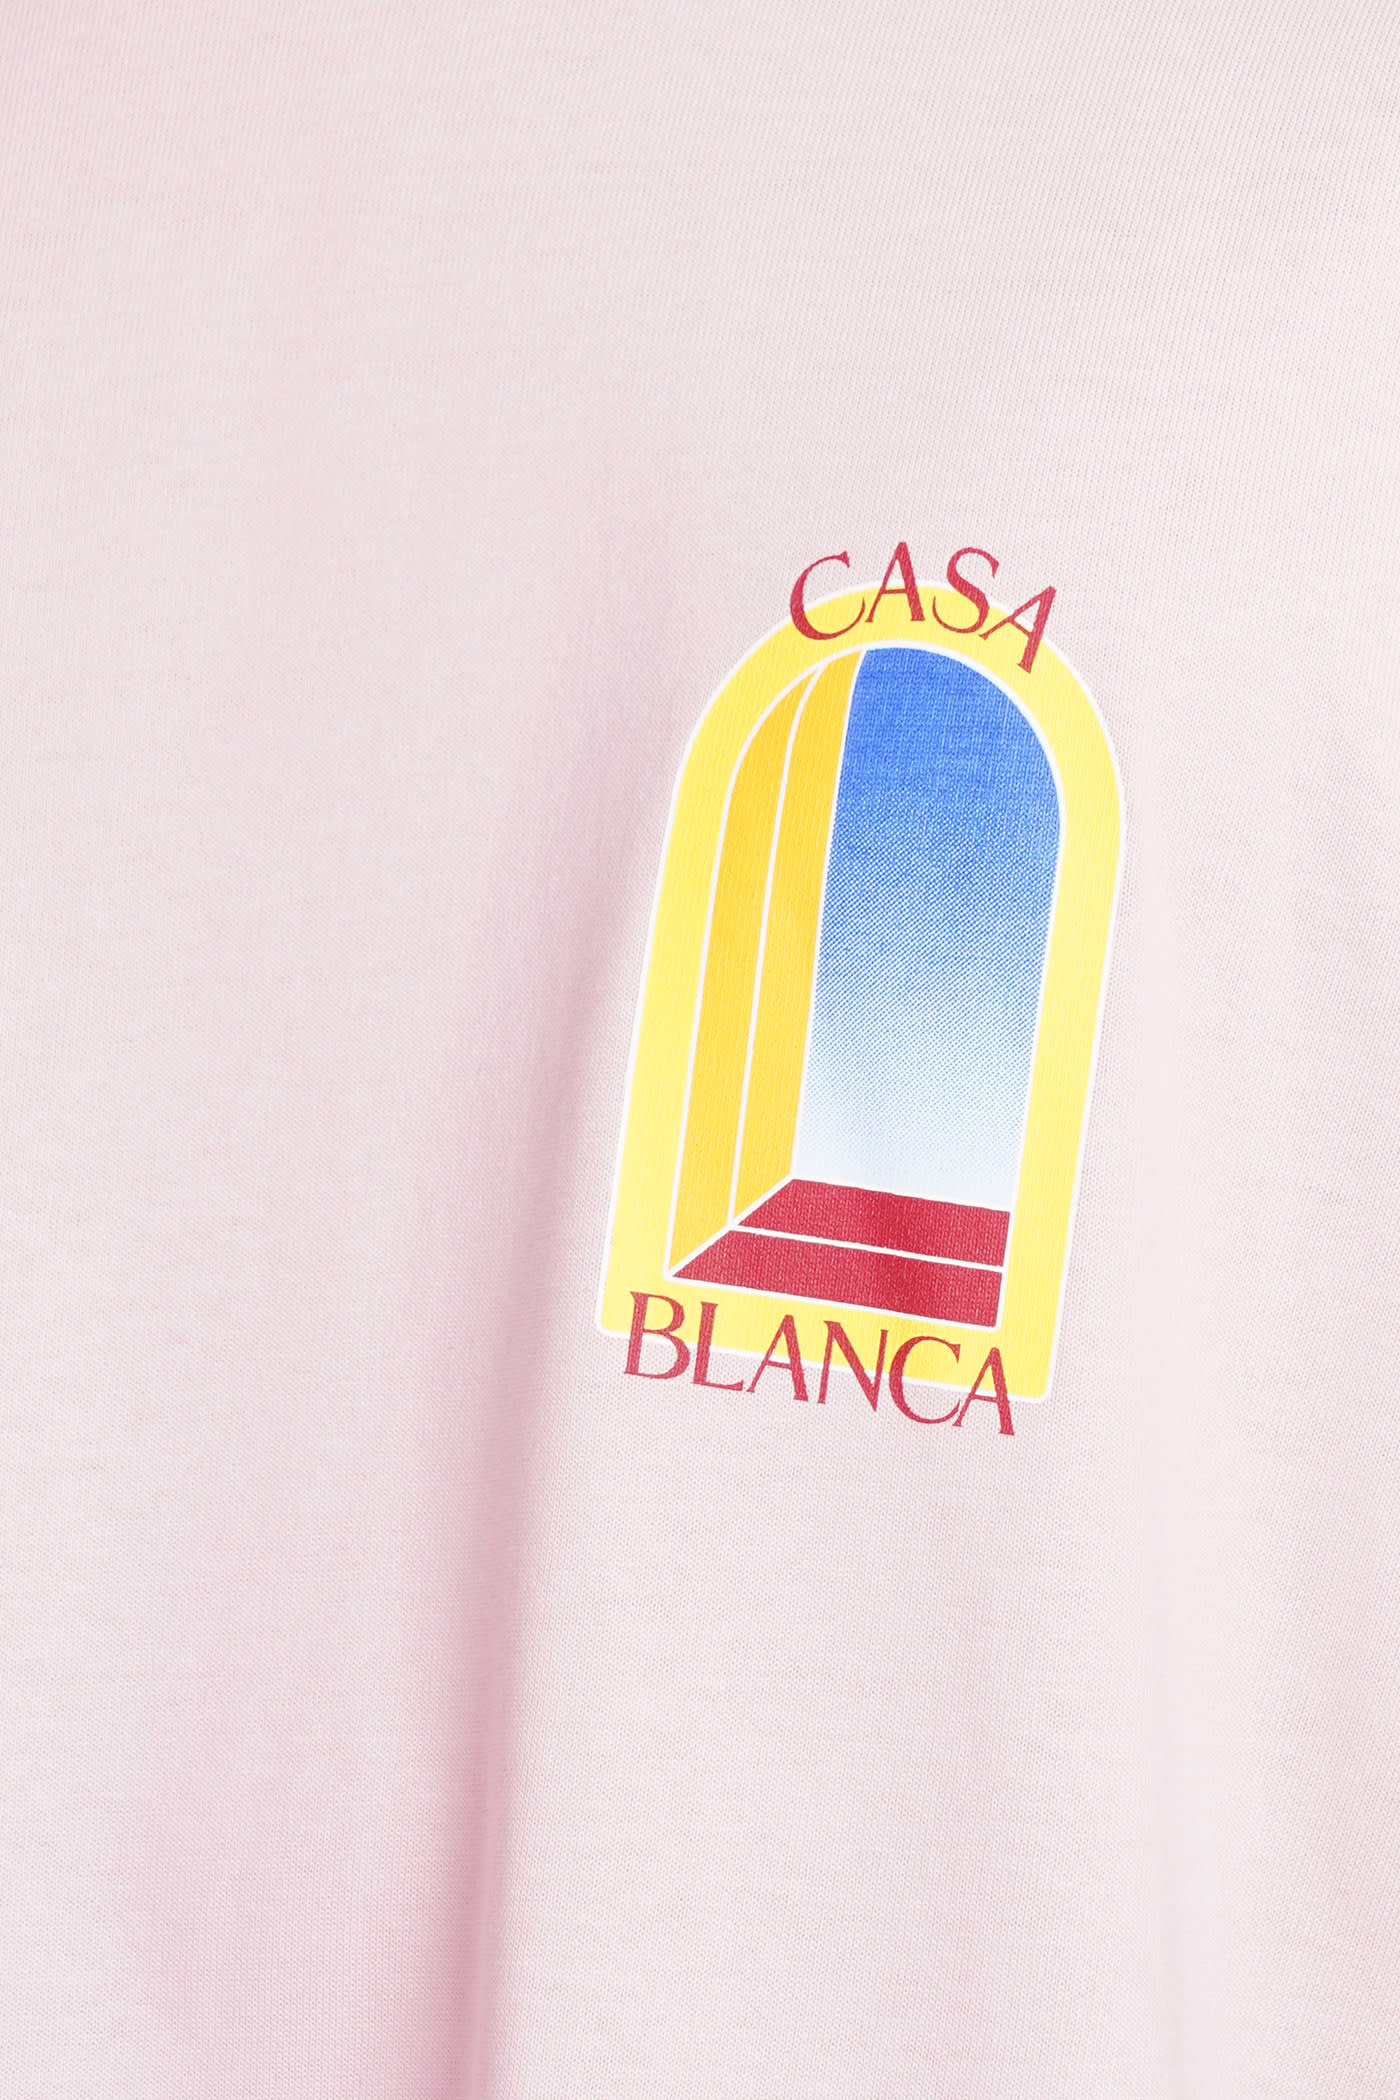 Shop Casablanca T-shirt In Rose-pink Cotton